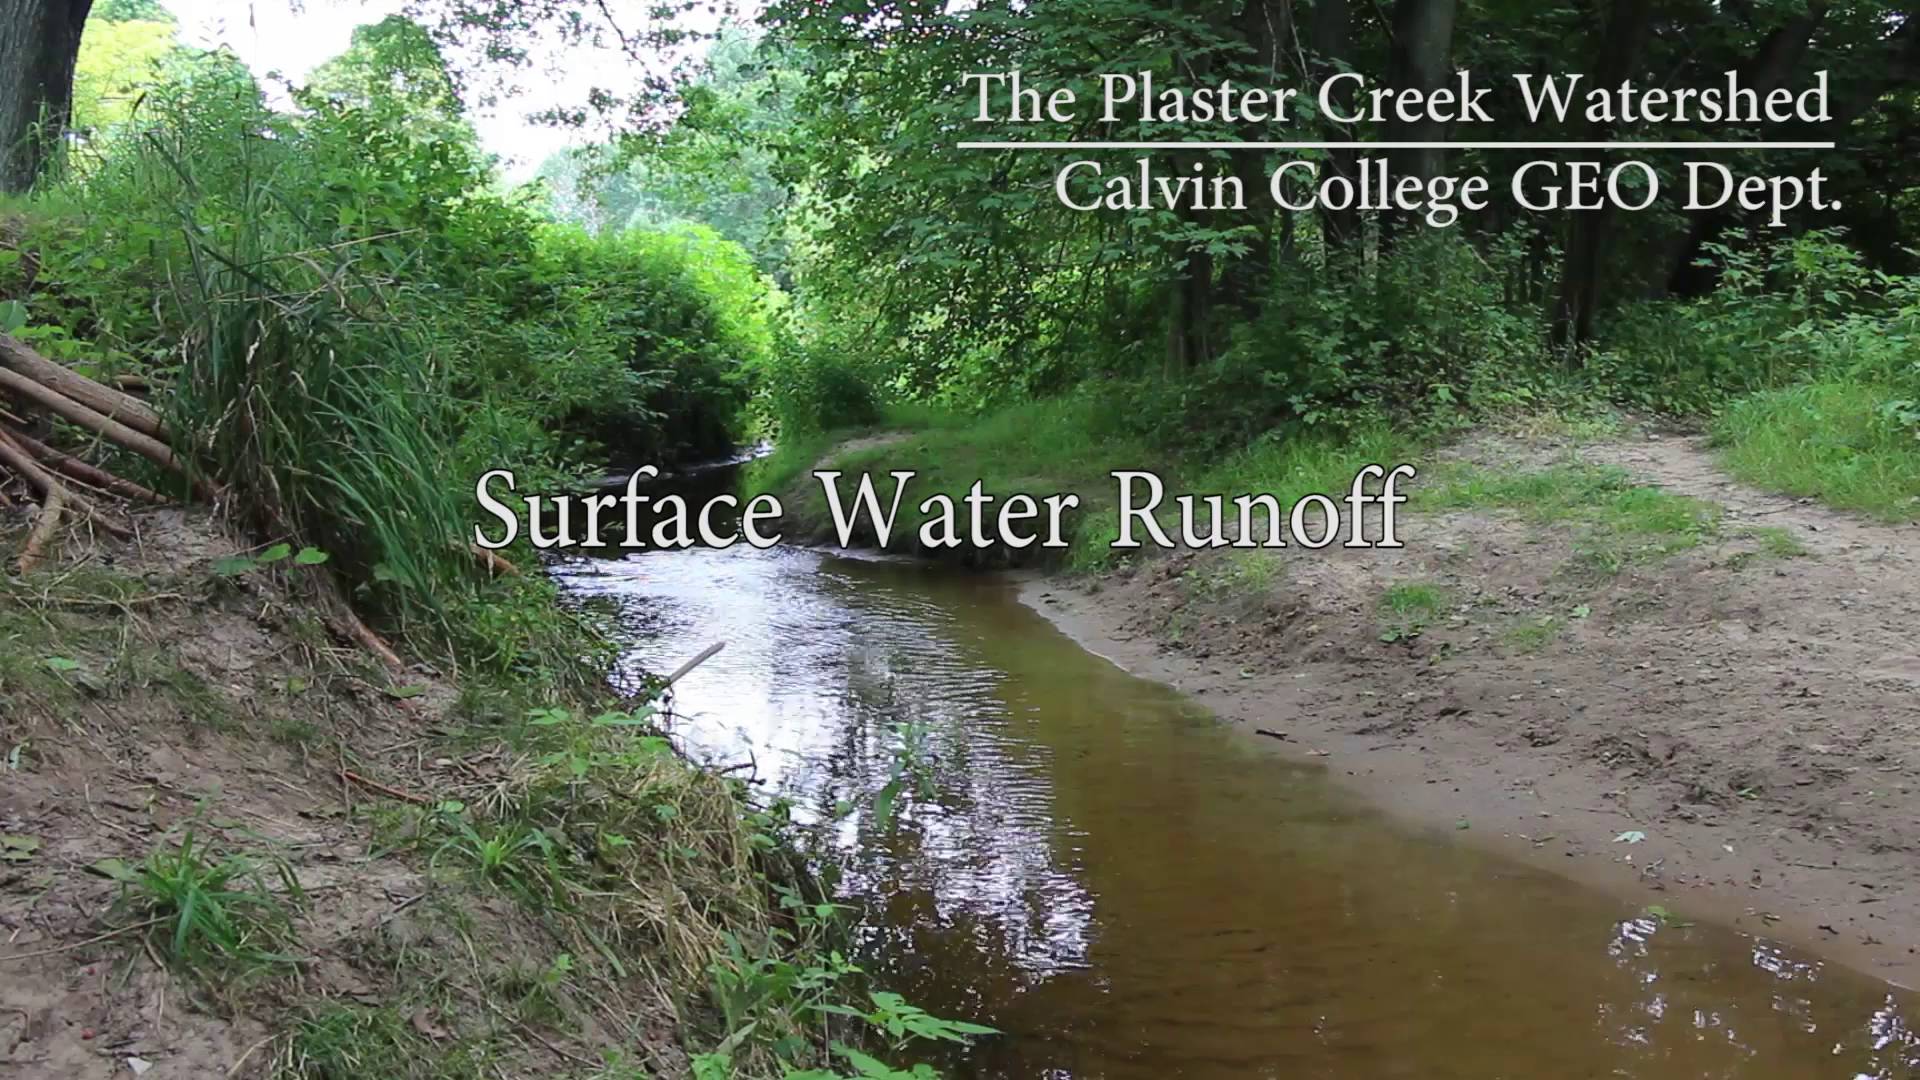 Surface Water Runoff of Plaster Creek - YouTube